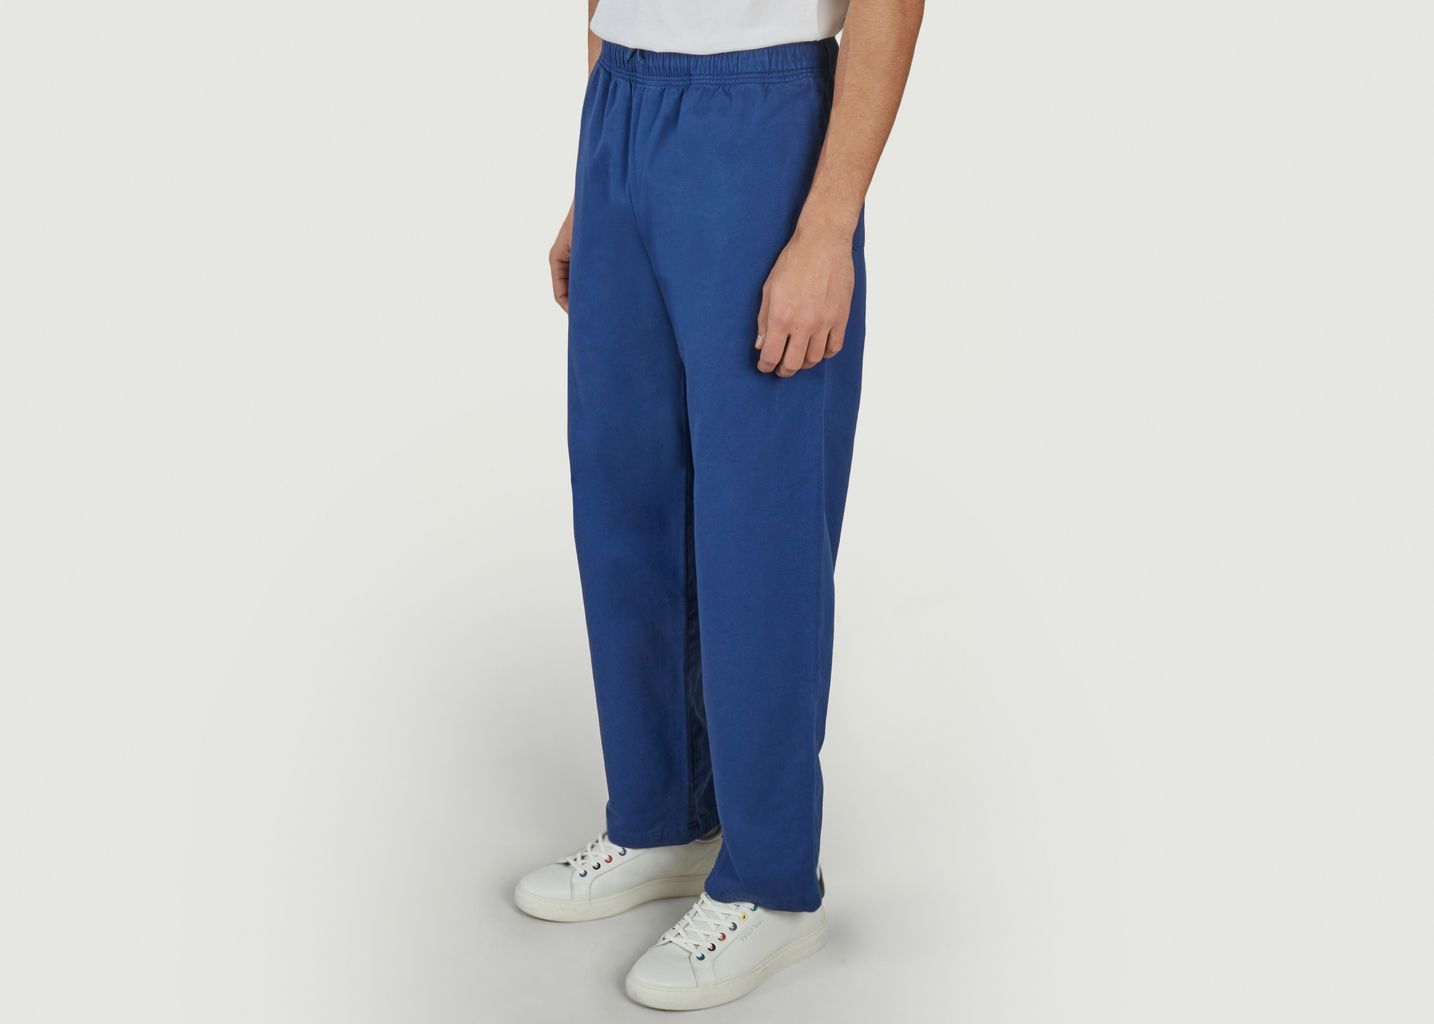 Chino pants - Japan Blue Jeans